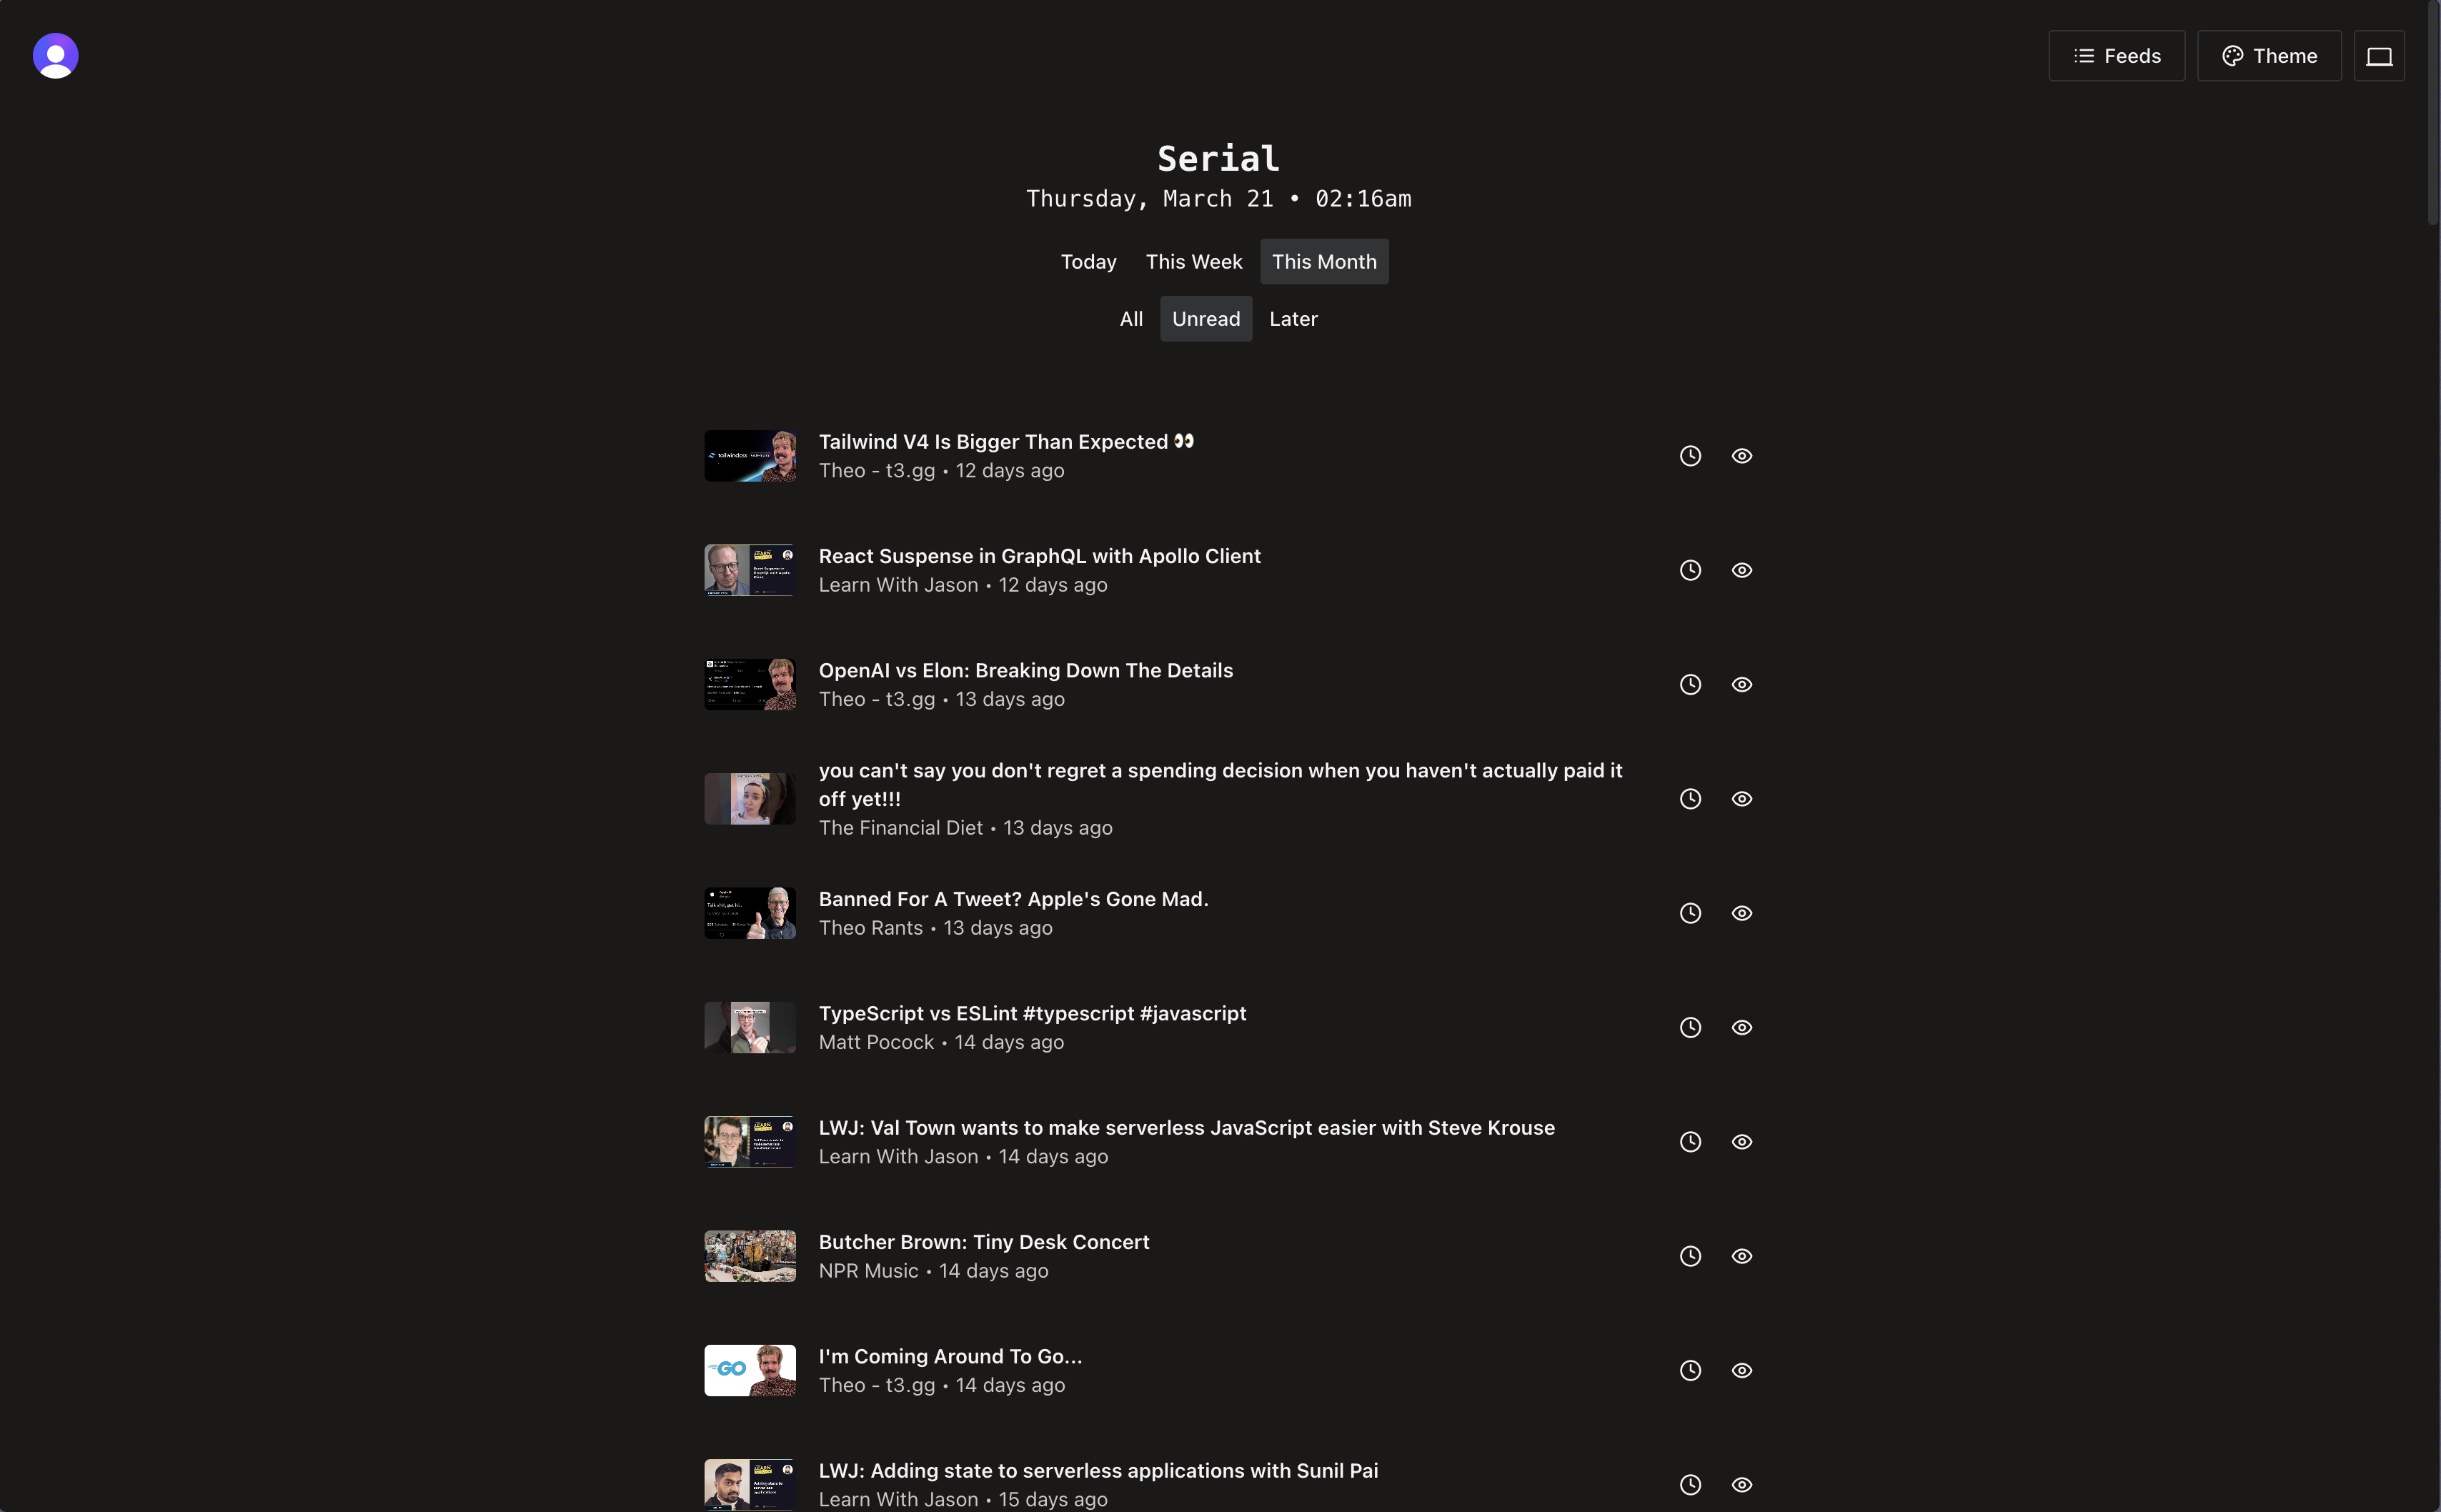 Screenshot of the Serial feed